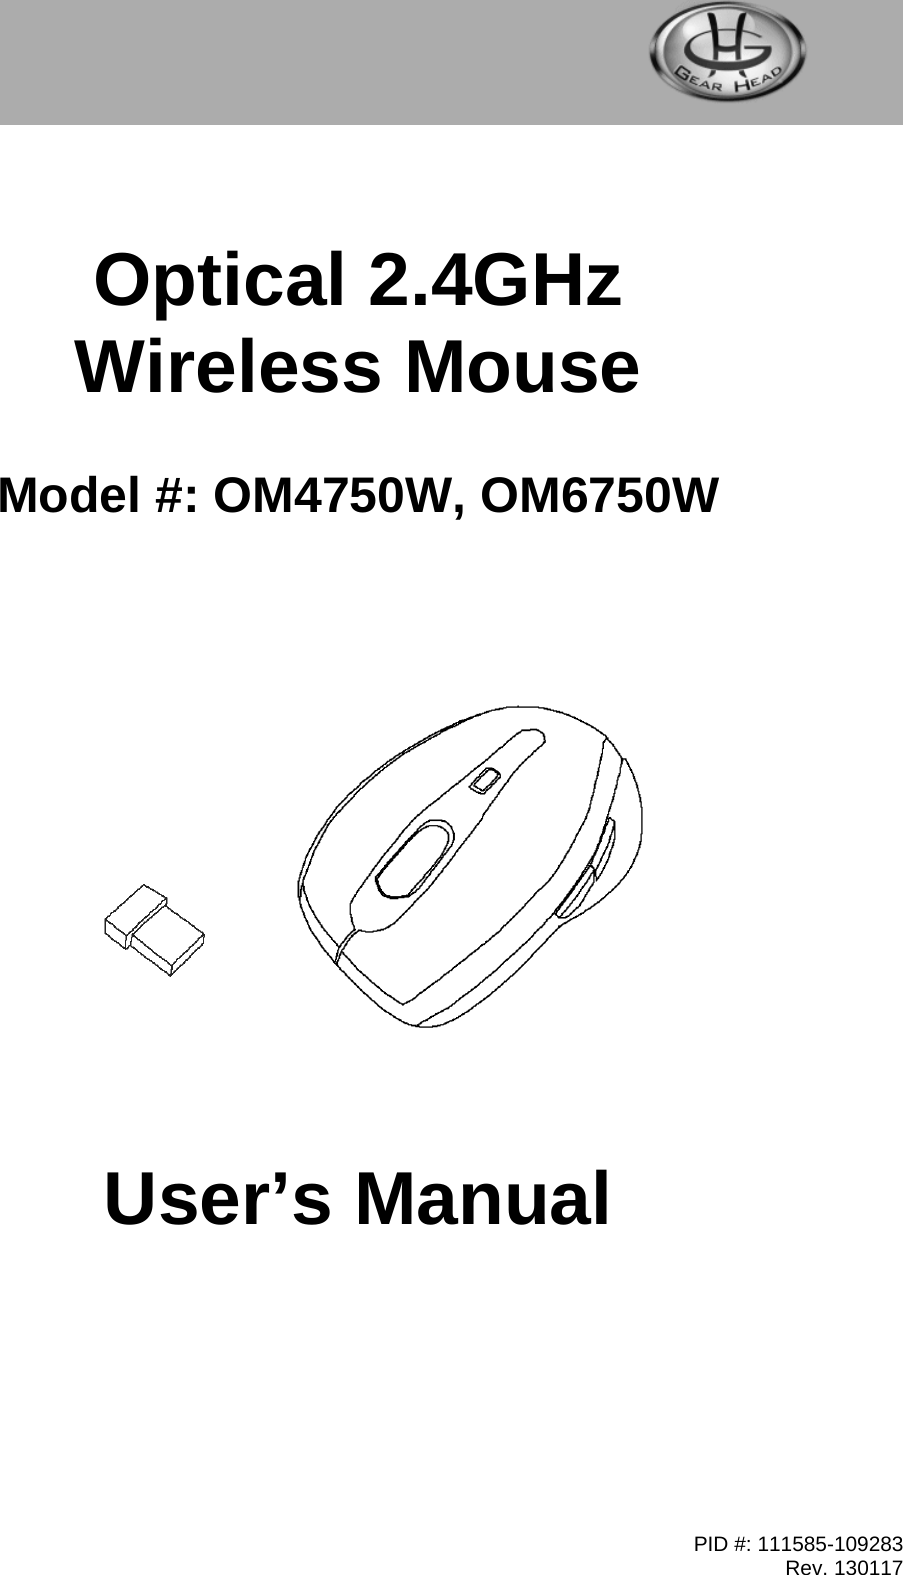 PID #: 111585-109283 Rev. 130117           Optical 2.4GHz Wireless Mouse   Model #: OM4750W, OM6750W                 User’s Manual         